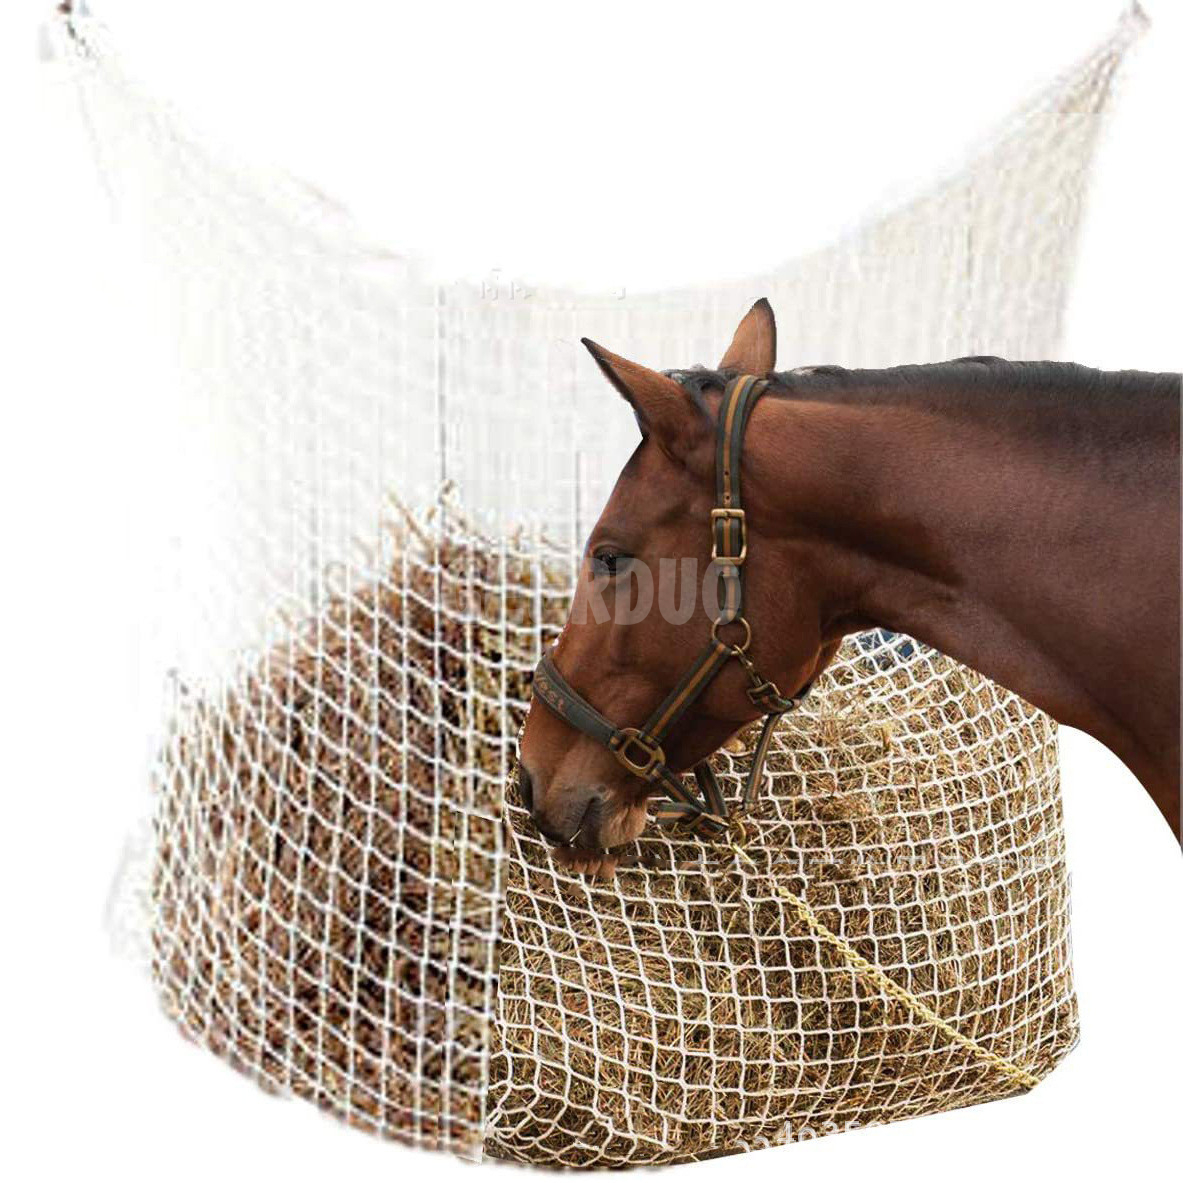  Bolsa de red de heno de alimentación lenta con abertura pequeña para alimentación de caballos durante todo el día GRDBH-7